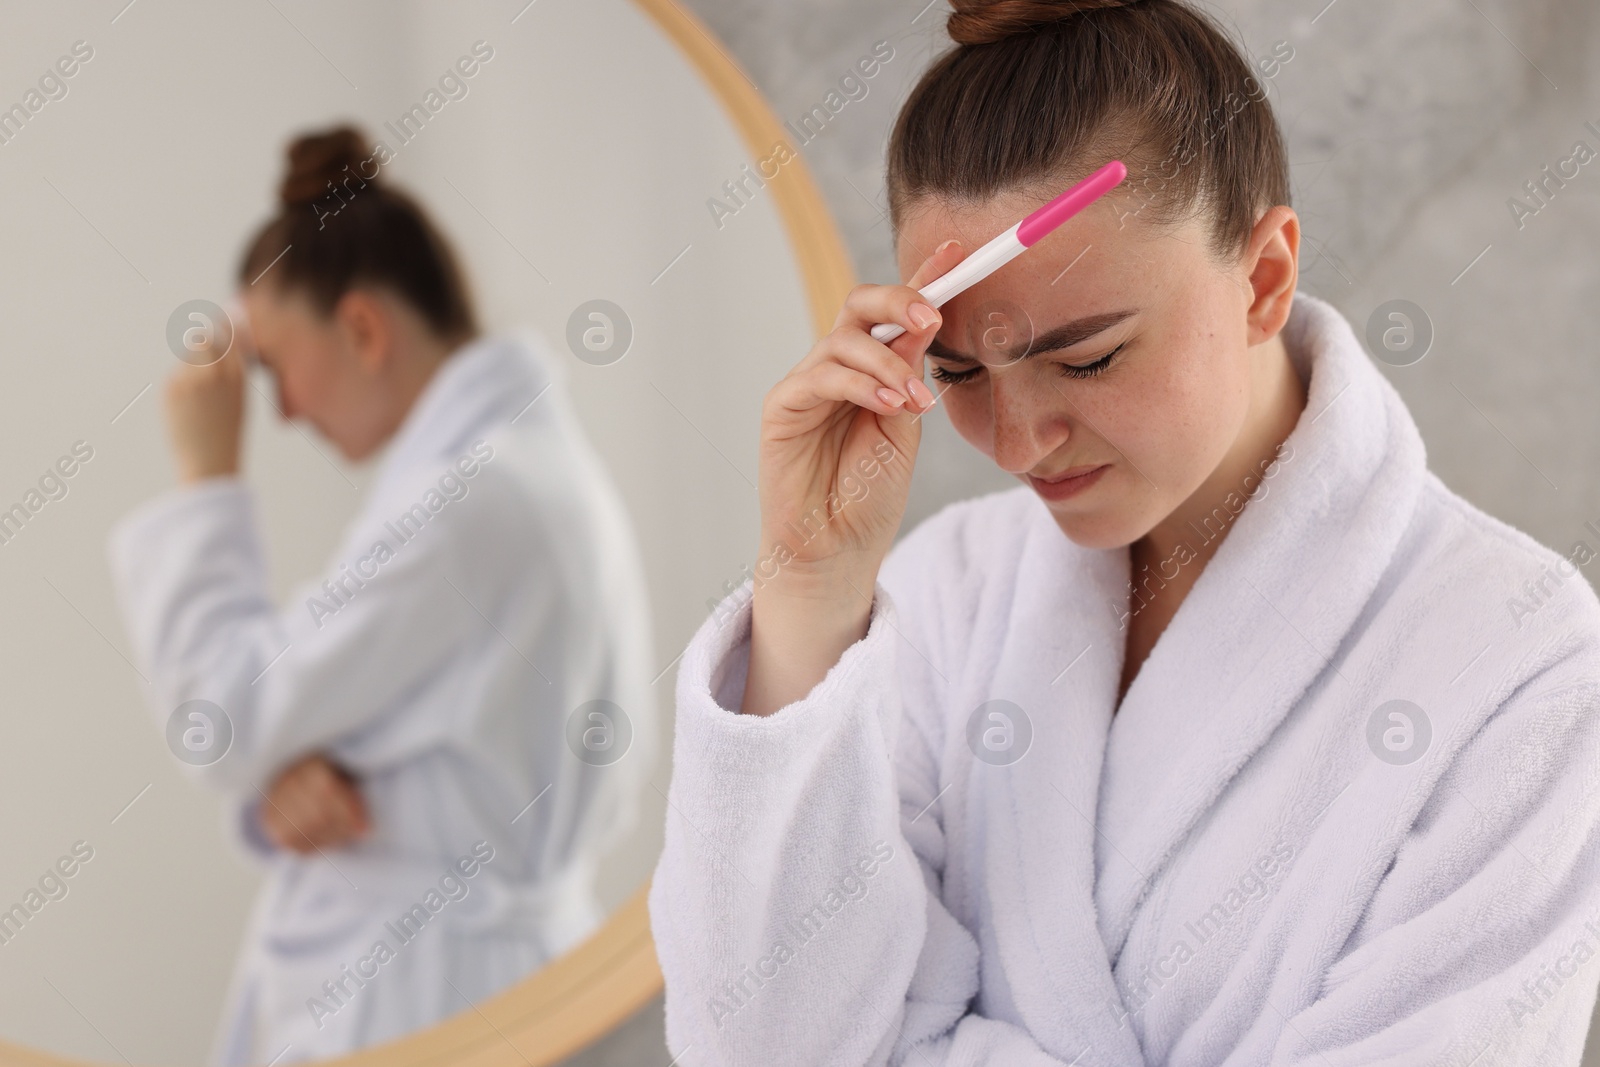 Photo of Sad woman holding pregnancy test in bathroom